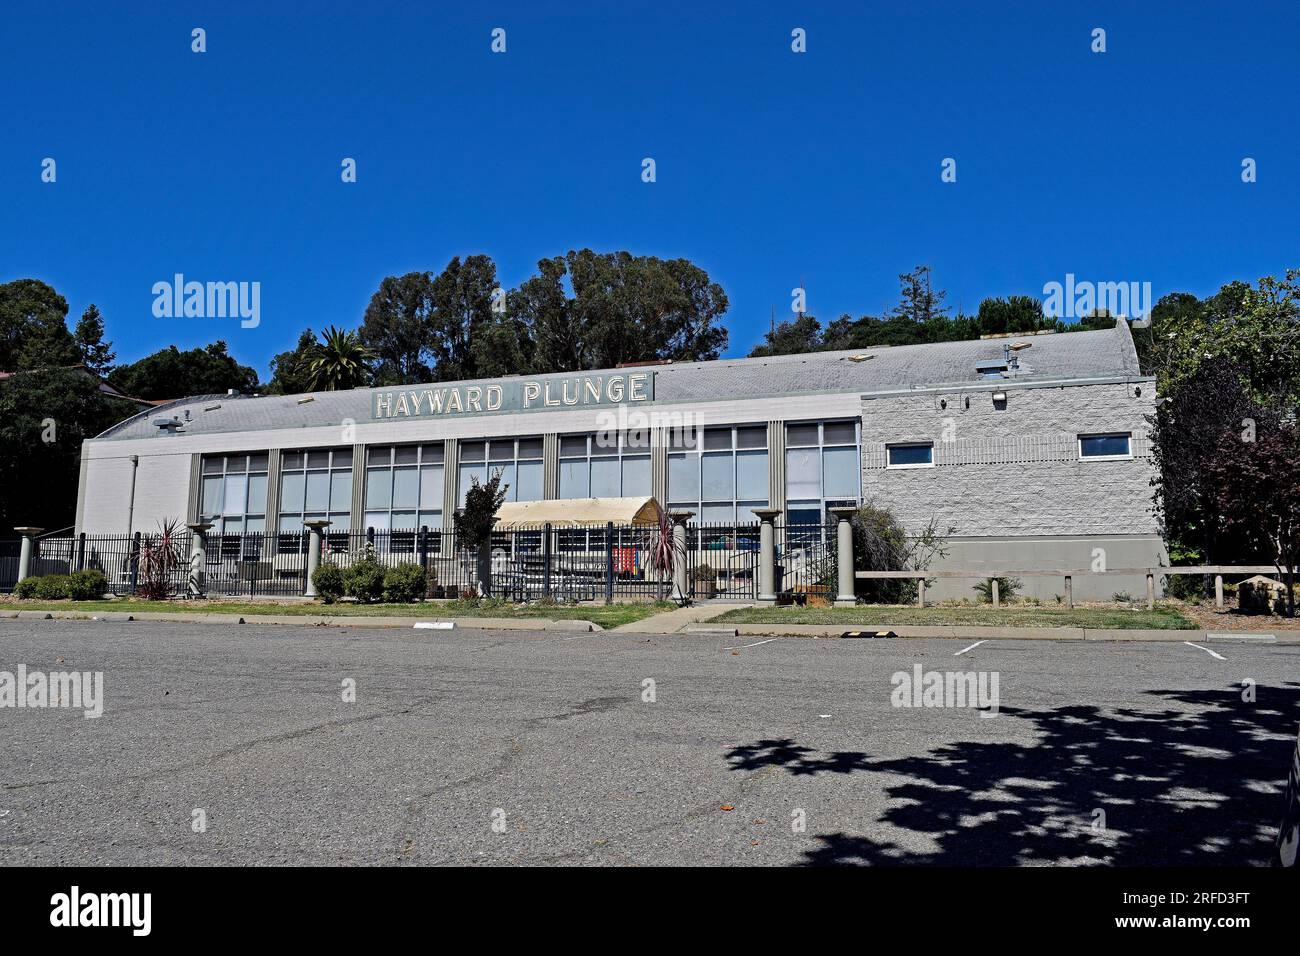 Hayward Plunge indoor swimming pool building on Mission Boulevard in Hayward, California Stock Photo